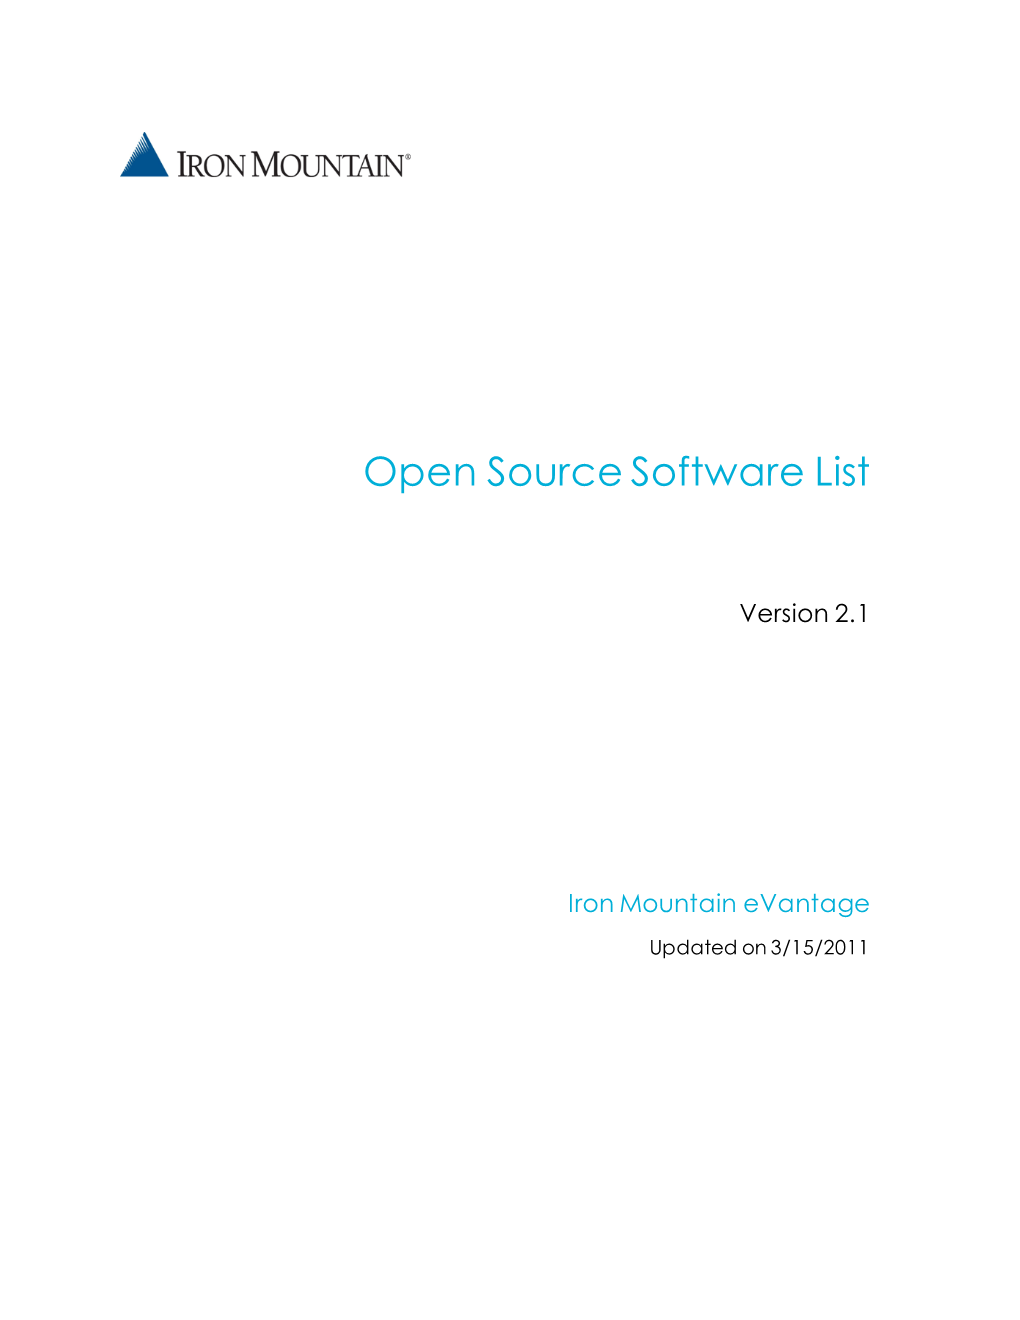 Evantage Open Source Software List